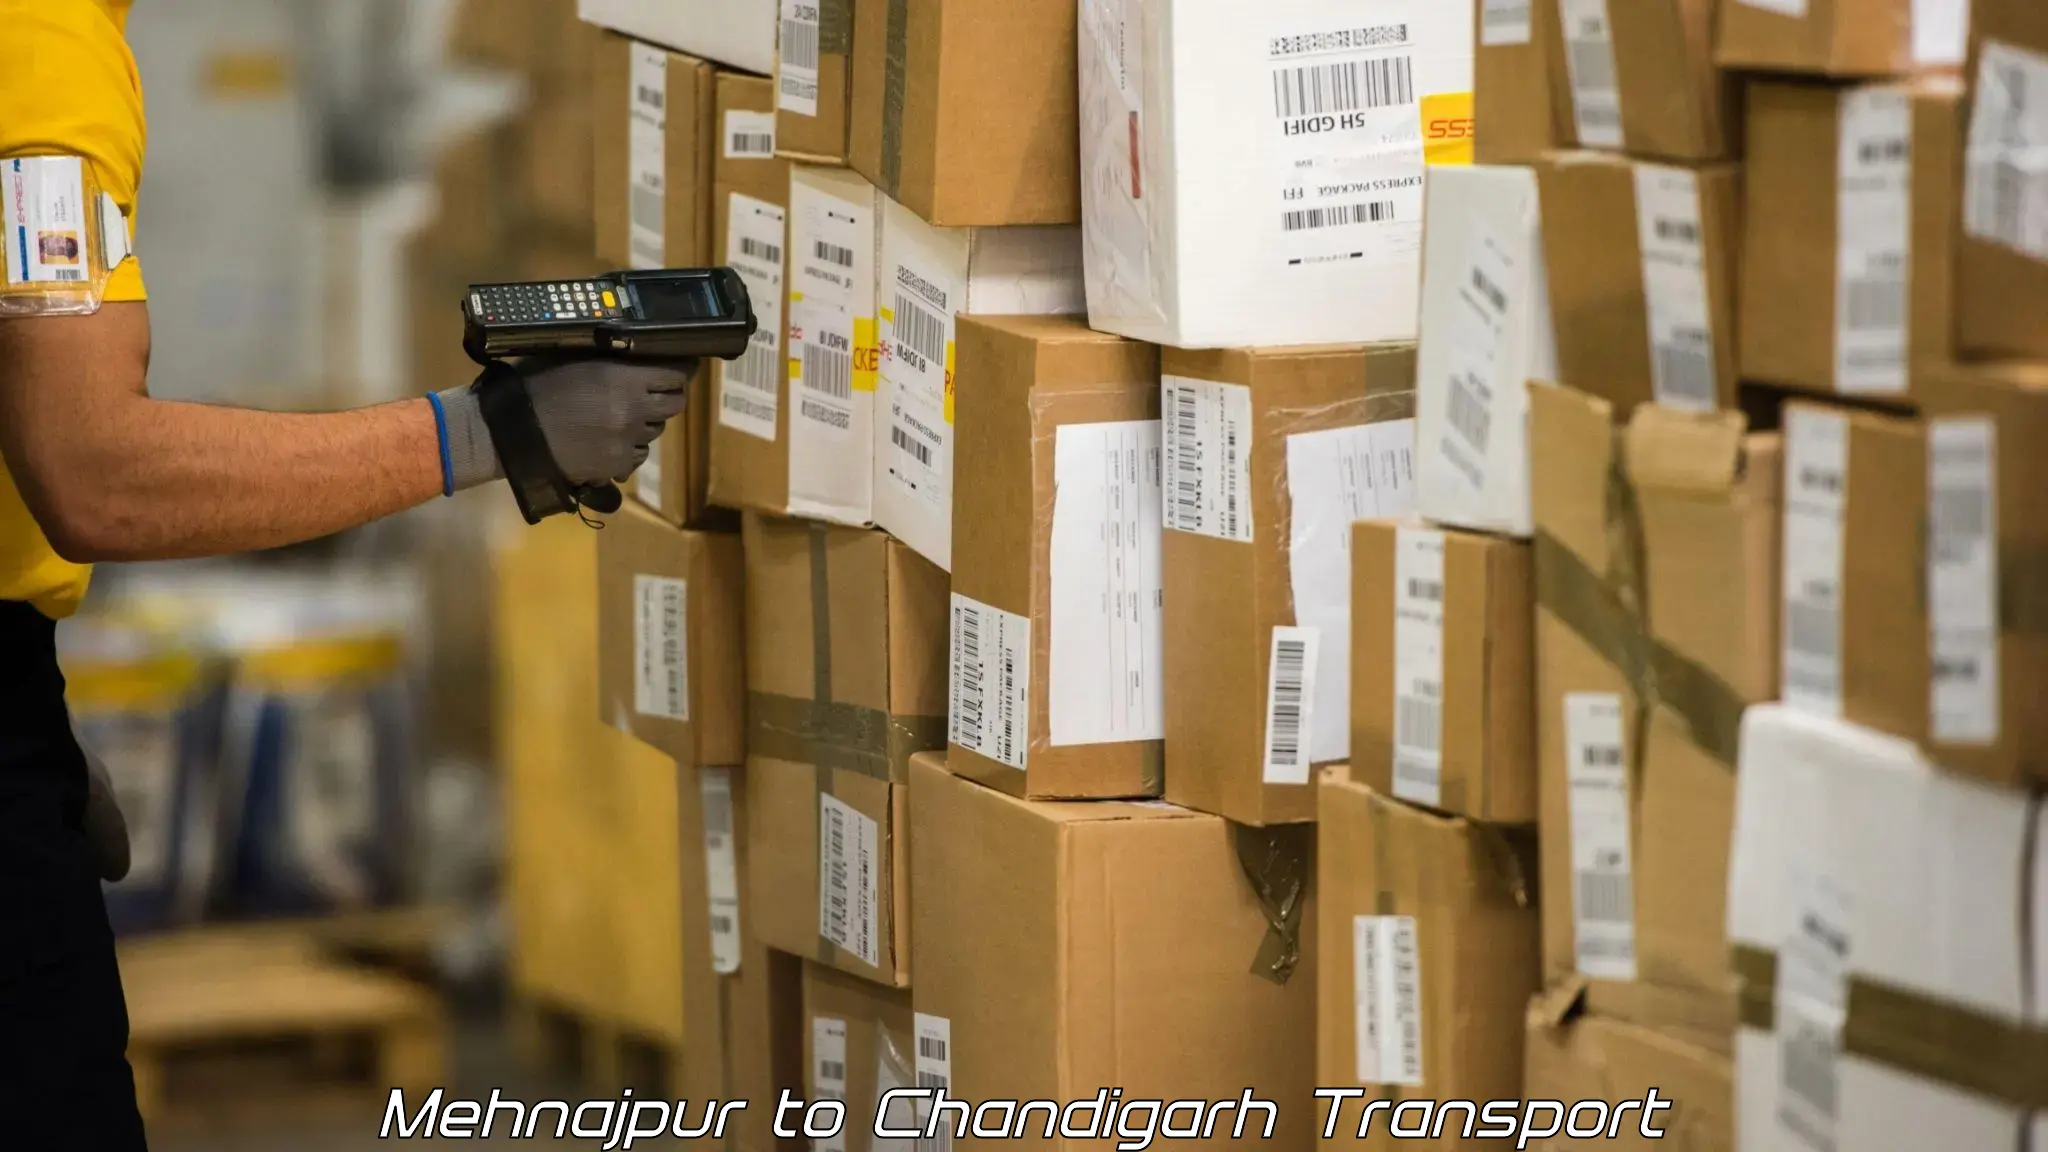 Shipping partner Mehnajpur to Chandigarh